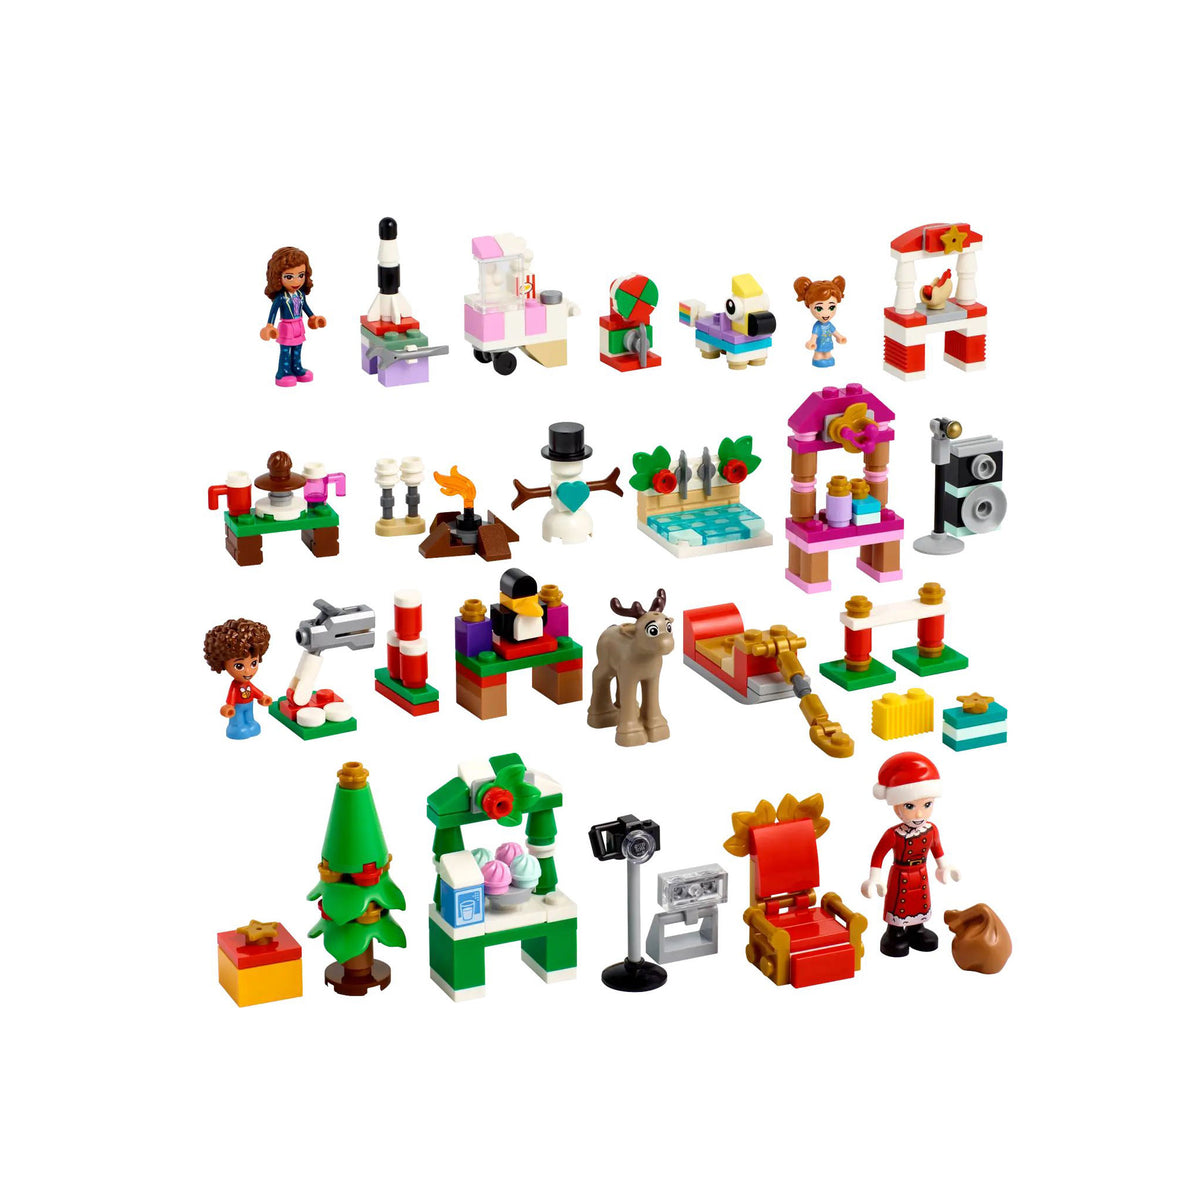 41706 - Lego Friends Adventskalender 1 (Lego)